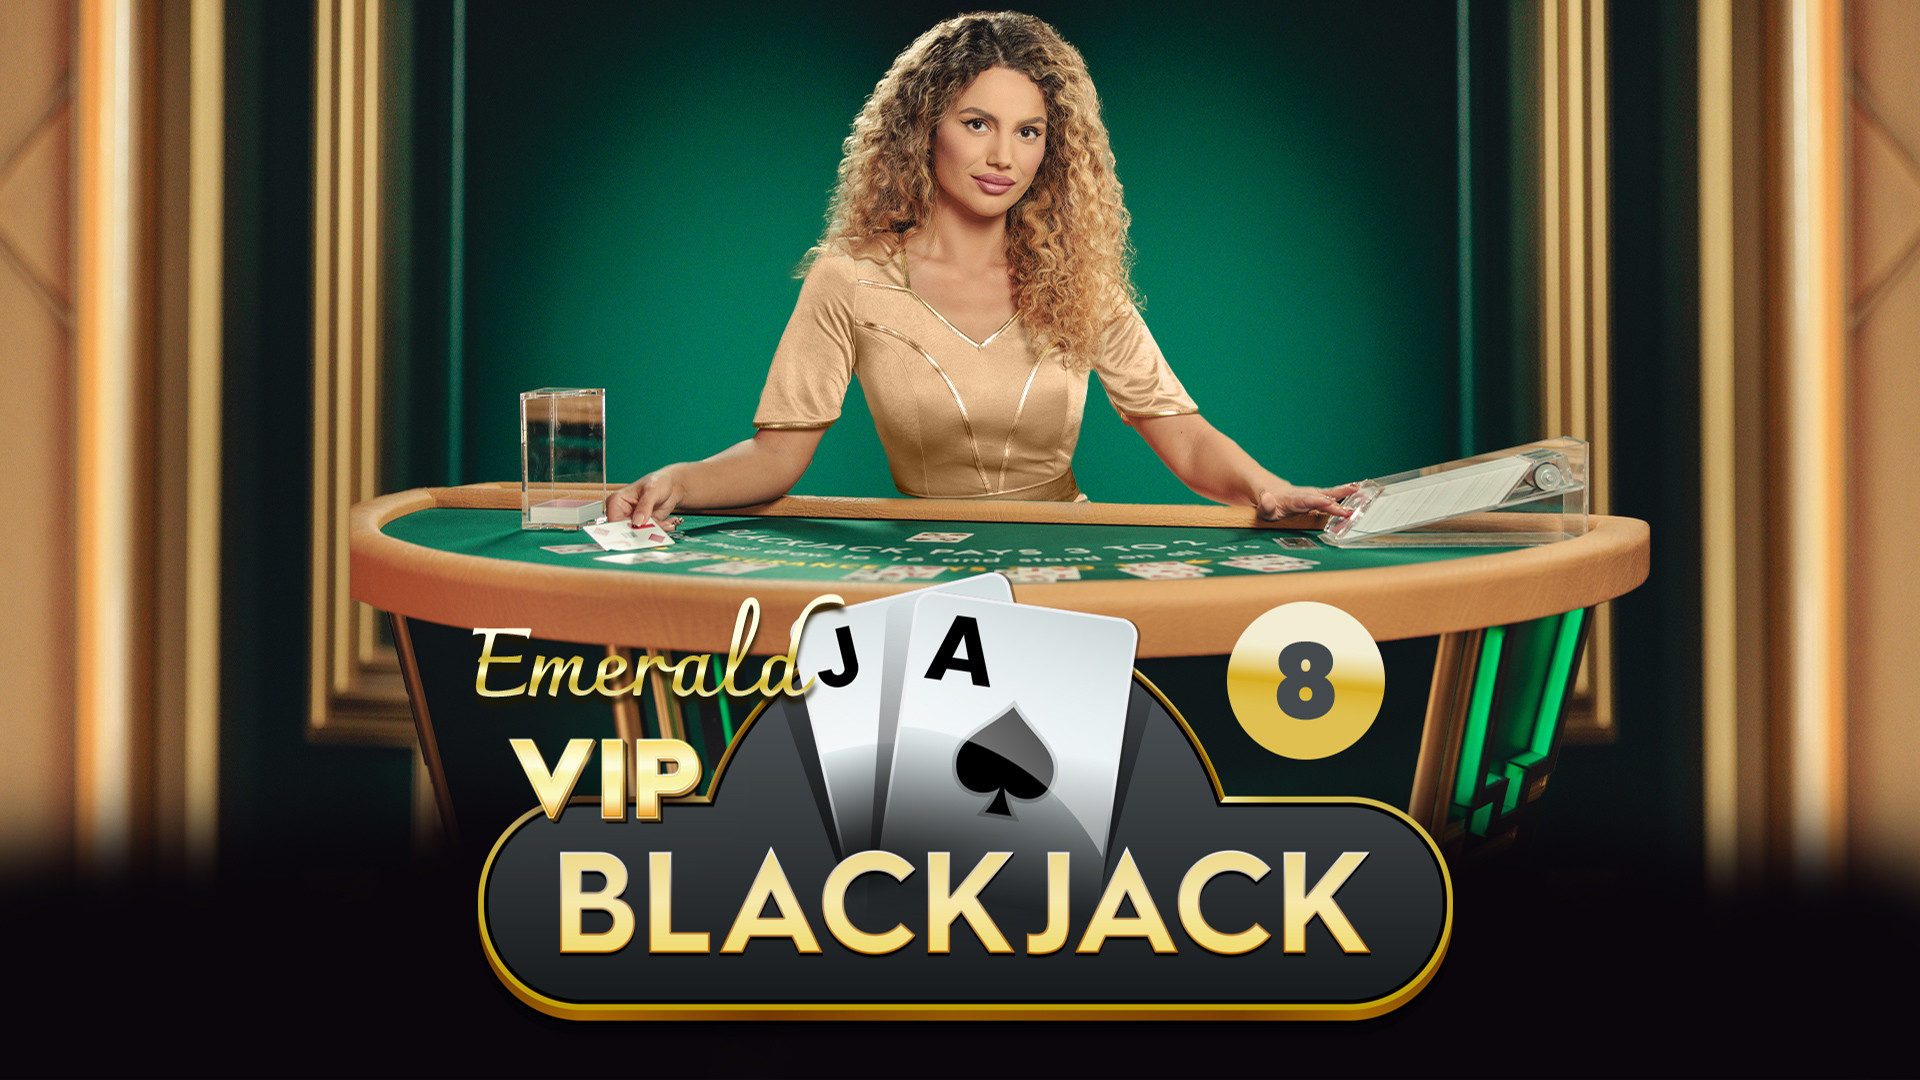 Emerald VIP Blackjack 8